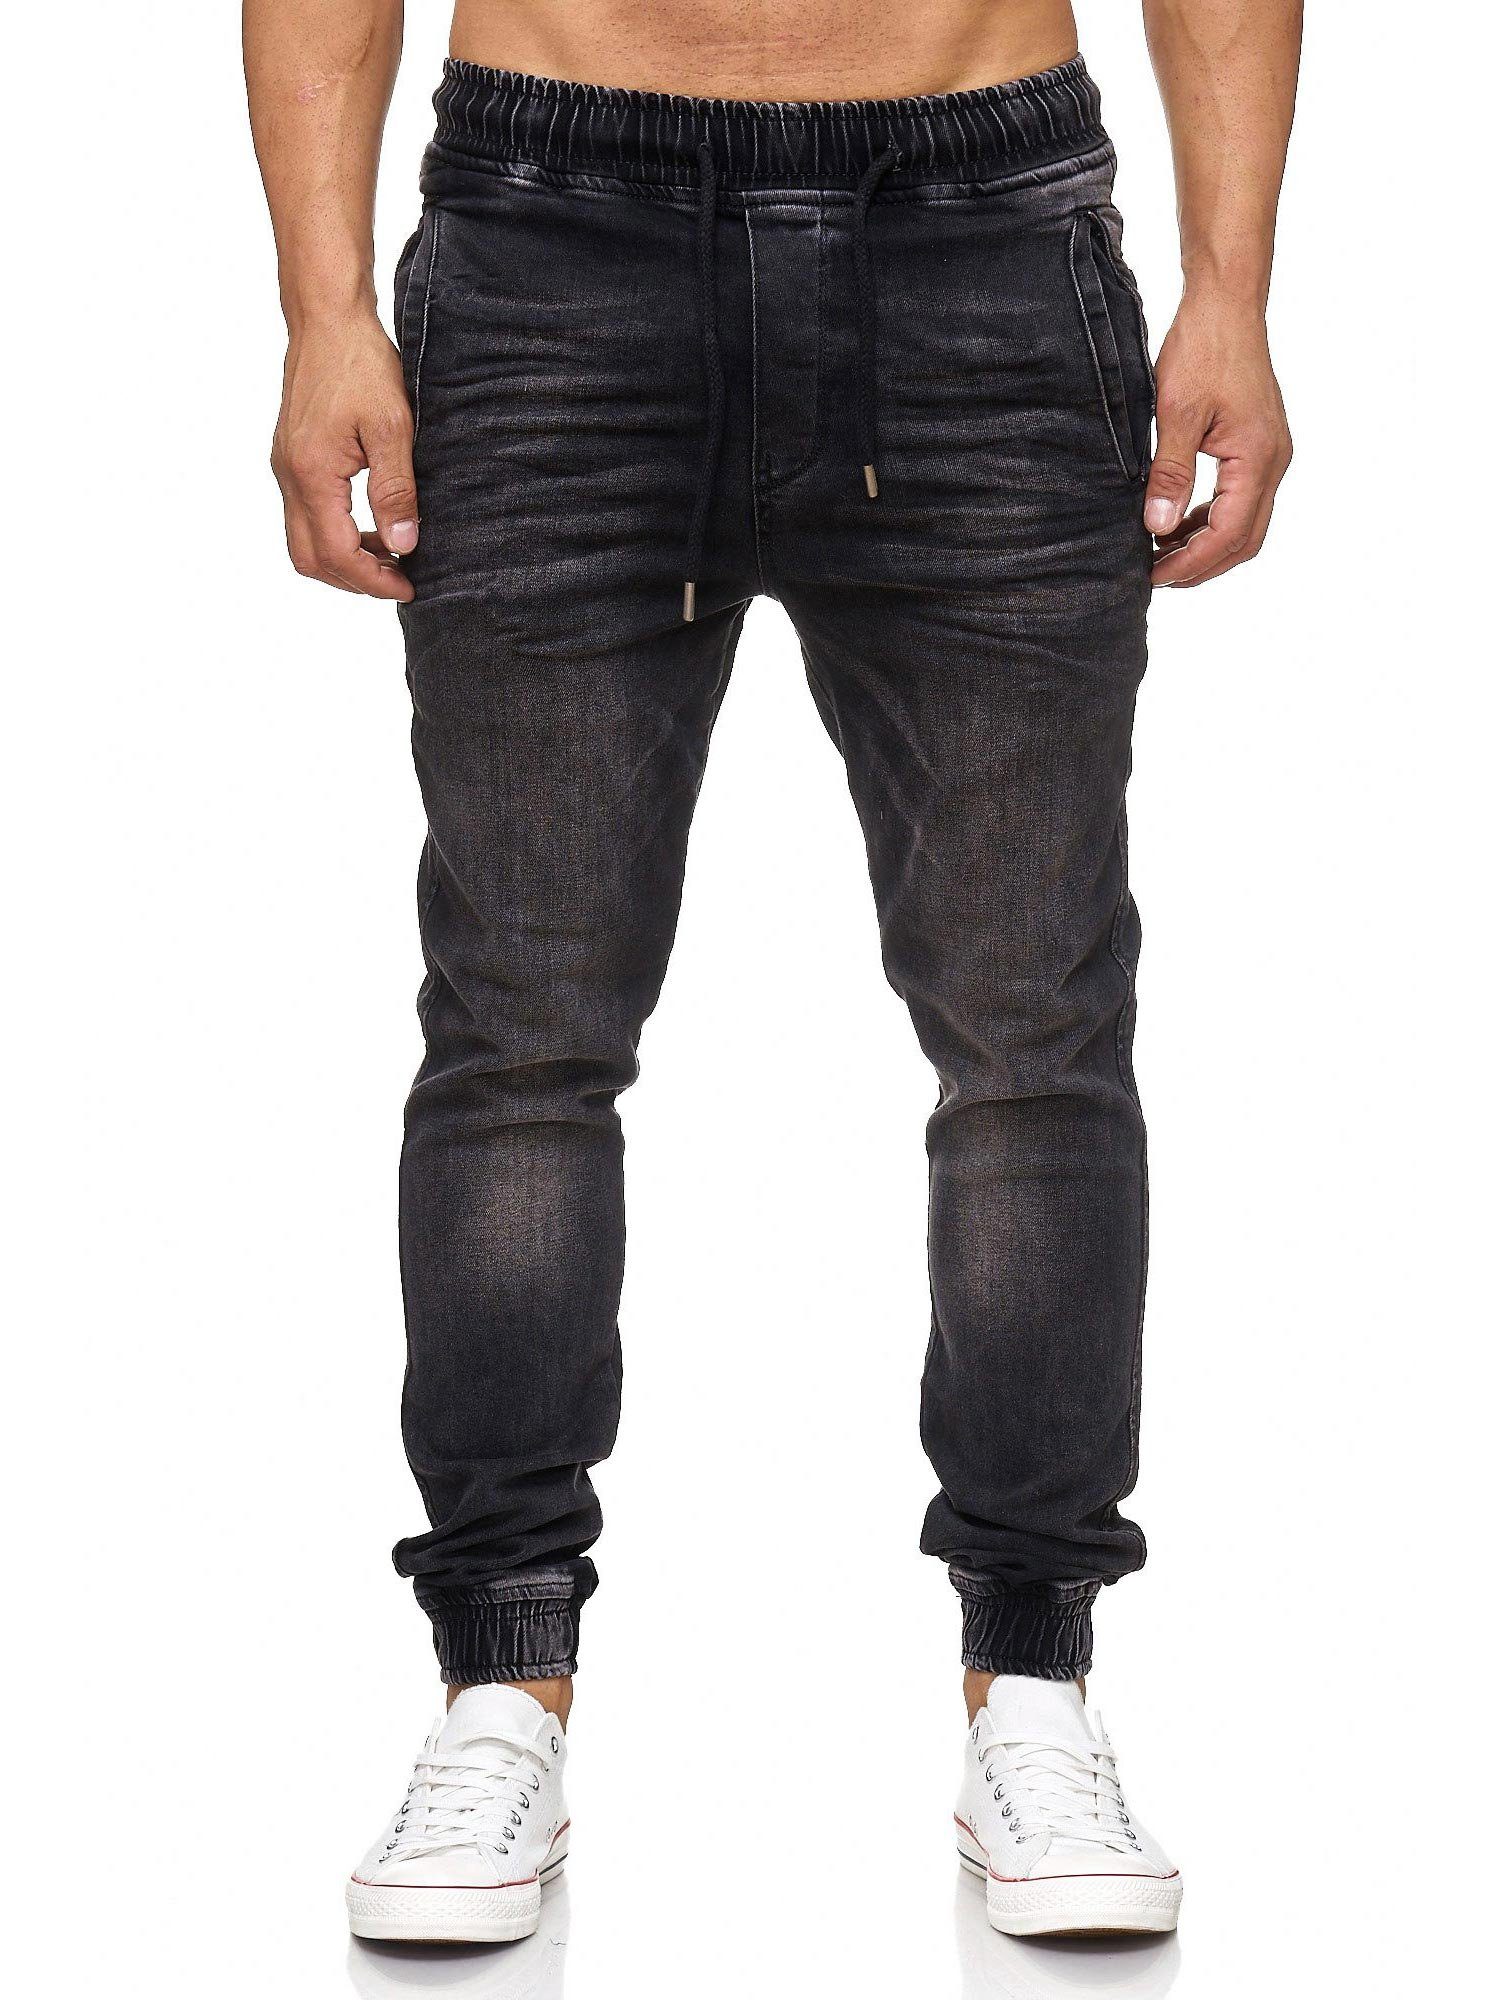 im Jogger-Stil Sweat Hose schwarz 17504 Tazzio Straight-Jeans